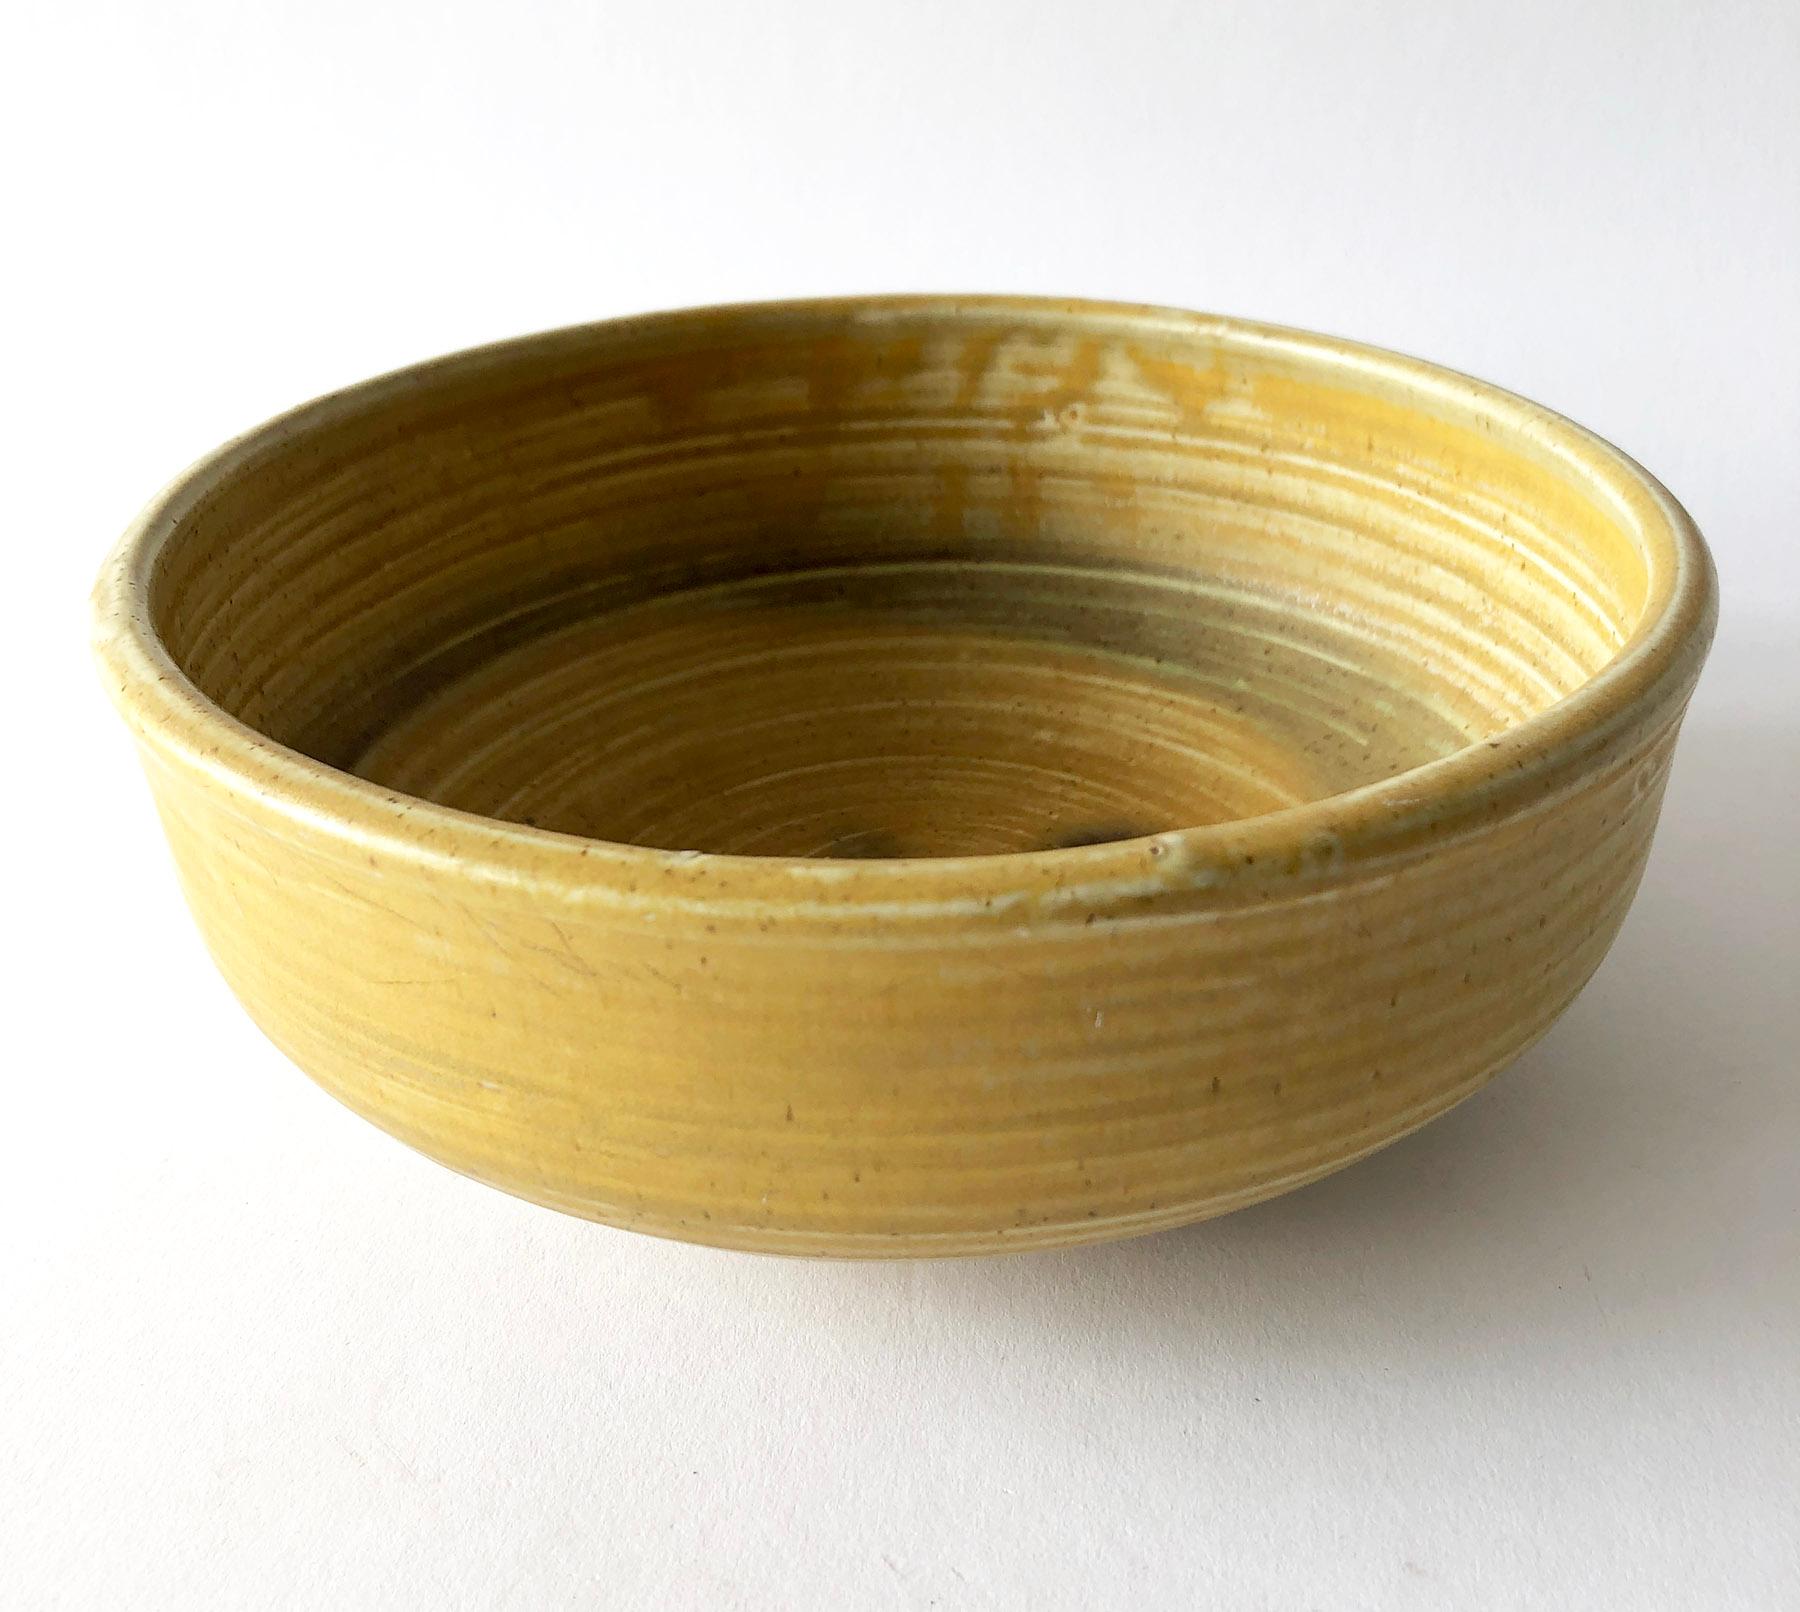 Decorative stoneware bowl with abstract design, created by Toshiko Takaezu of Honolulu, Hawaii. Bowl measures 8.5